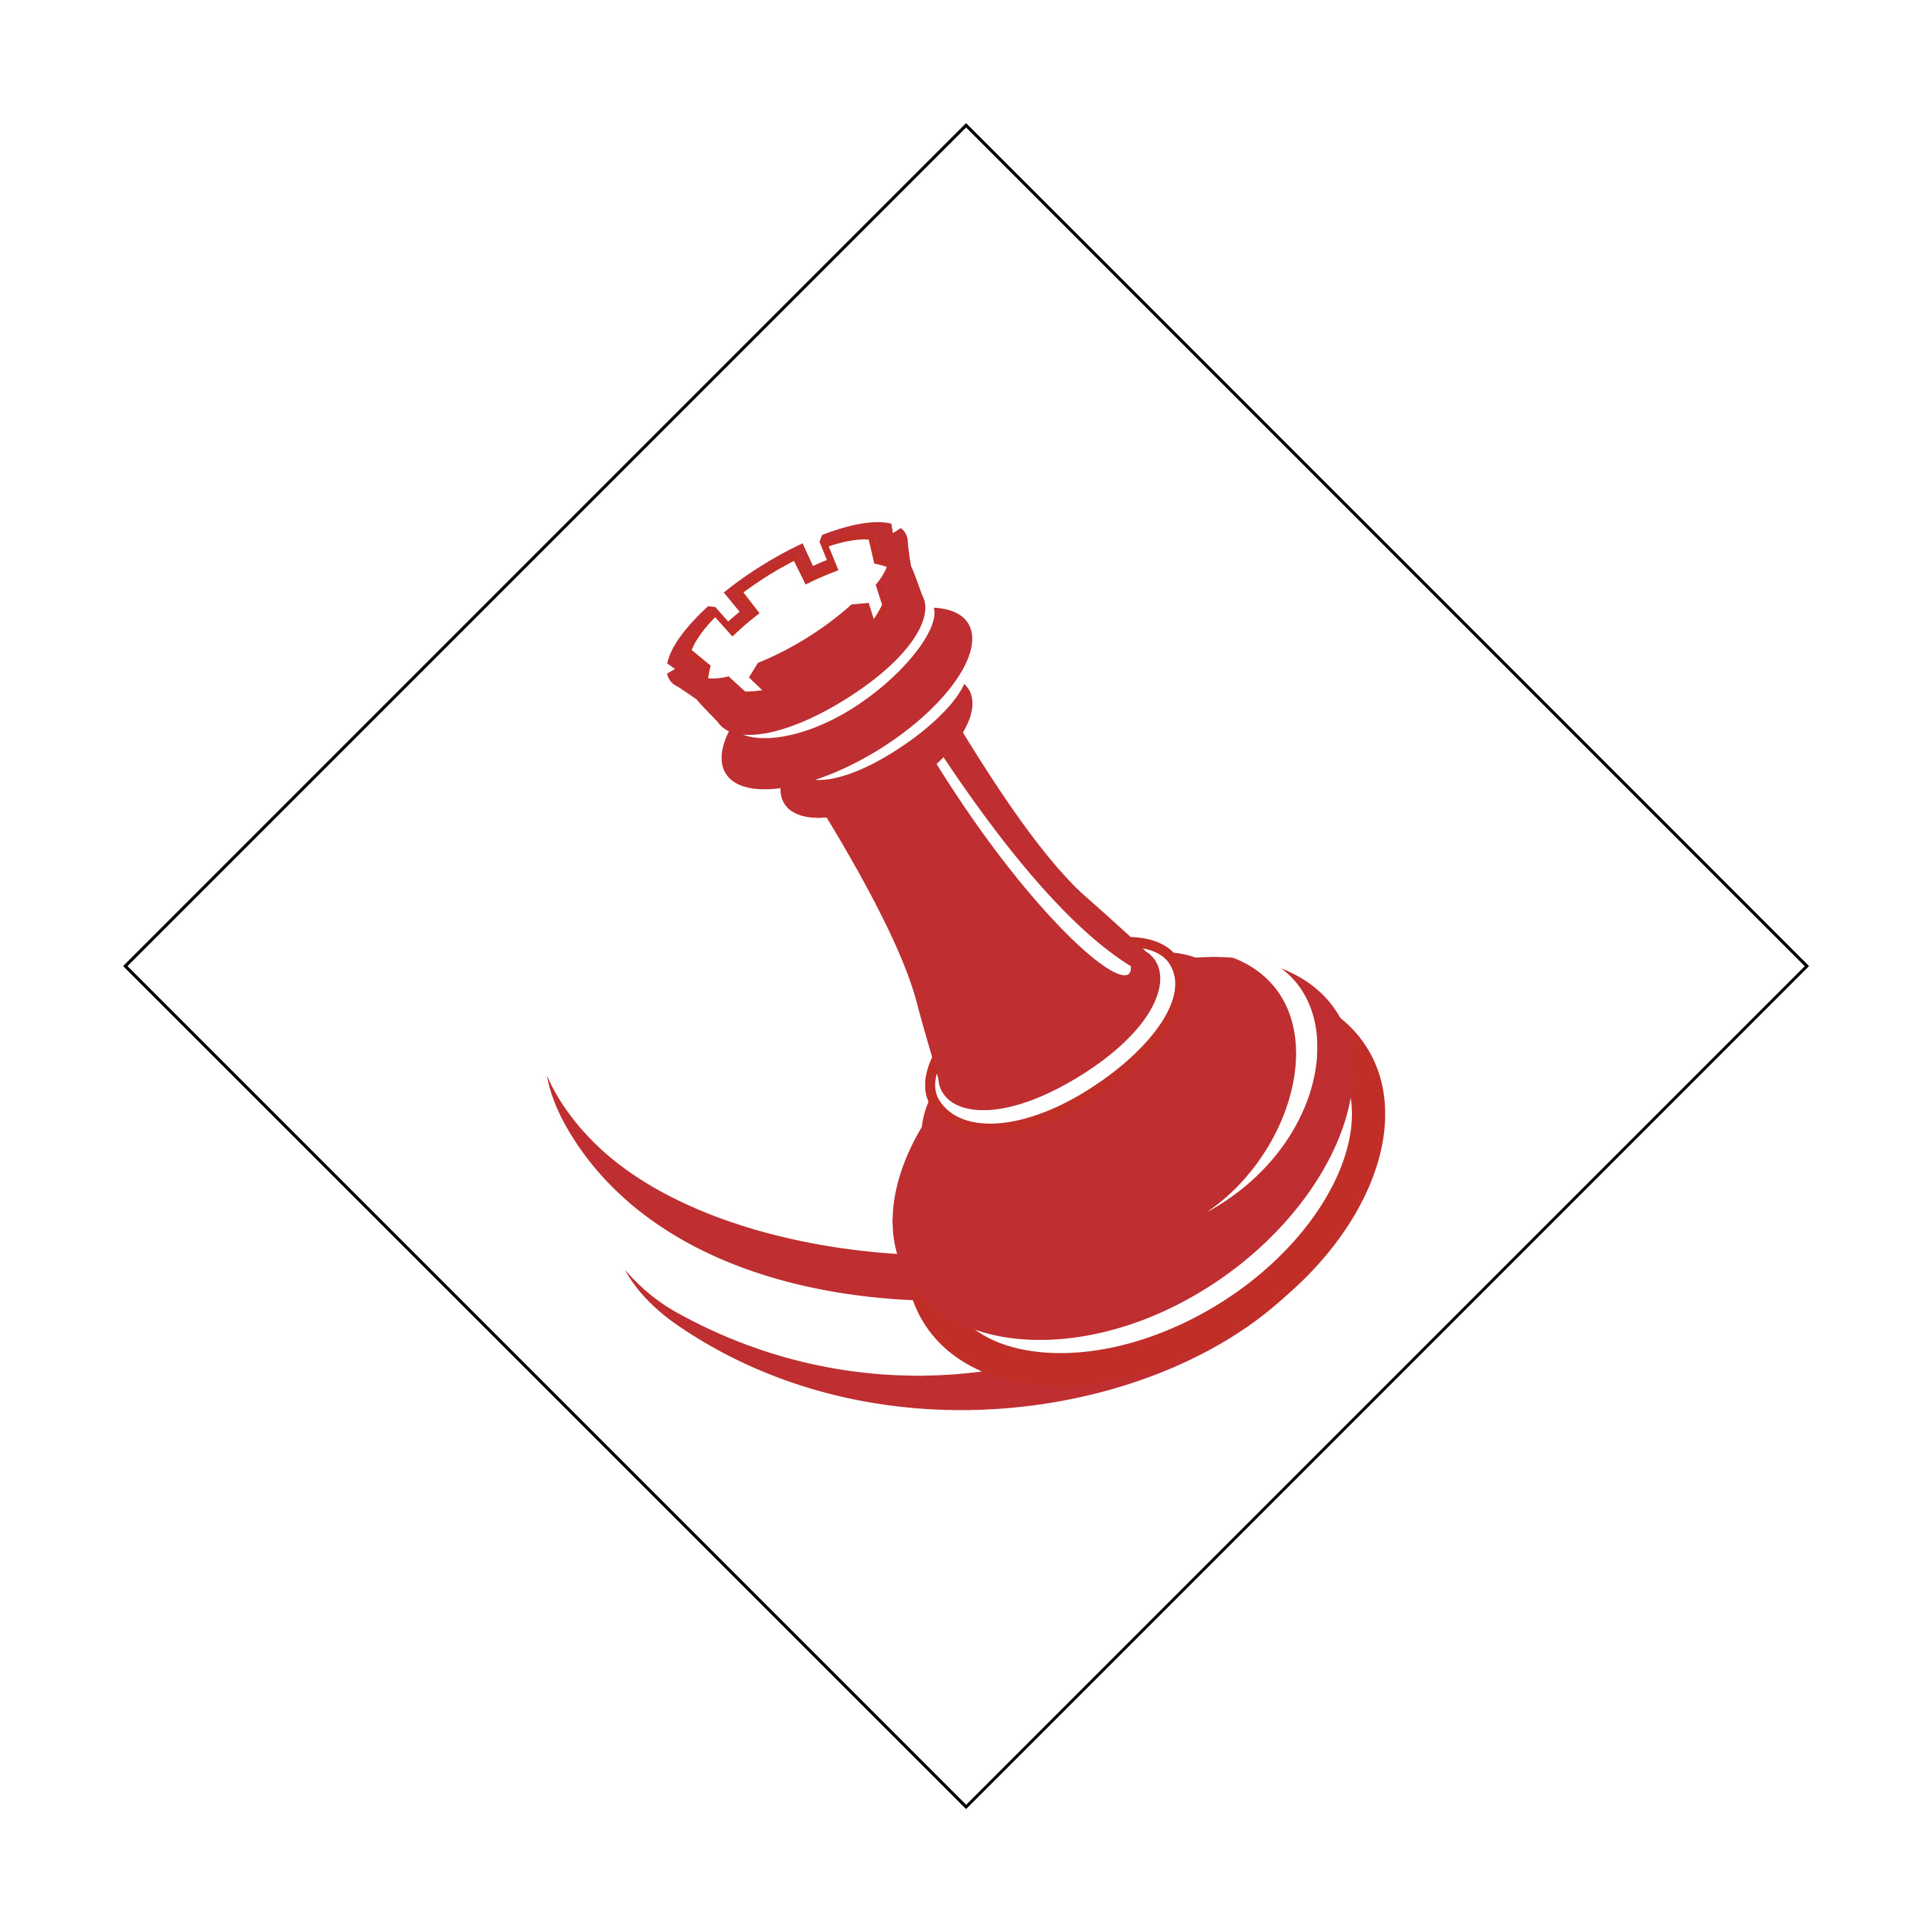 2023 Superbet Chess Classic Romania